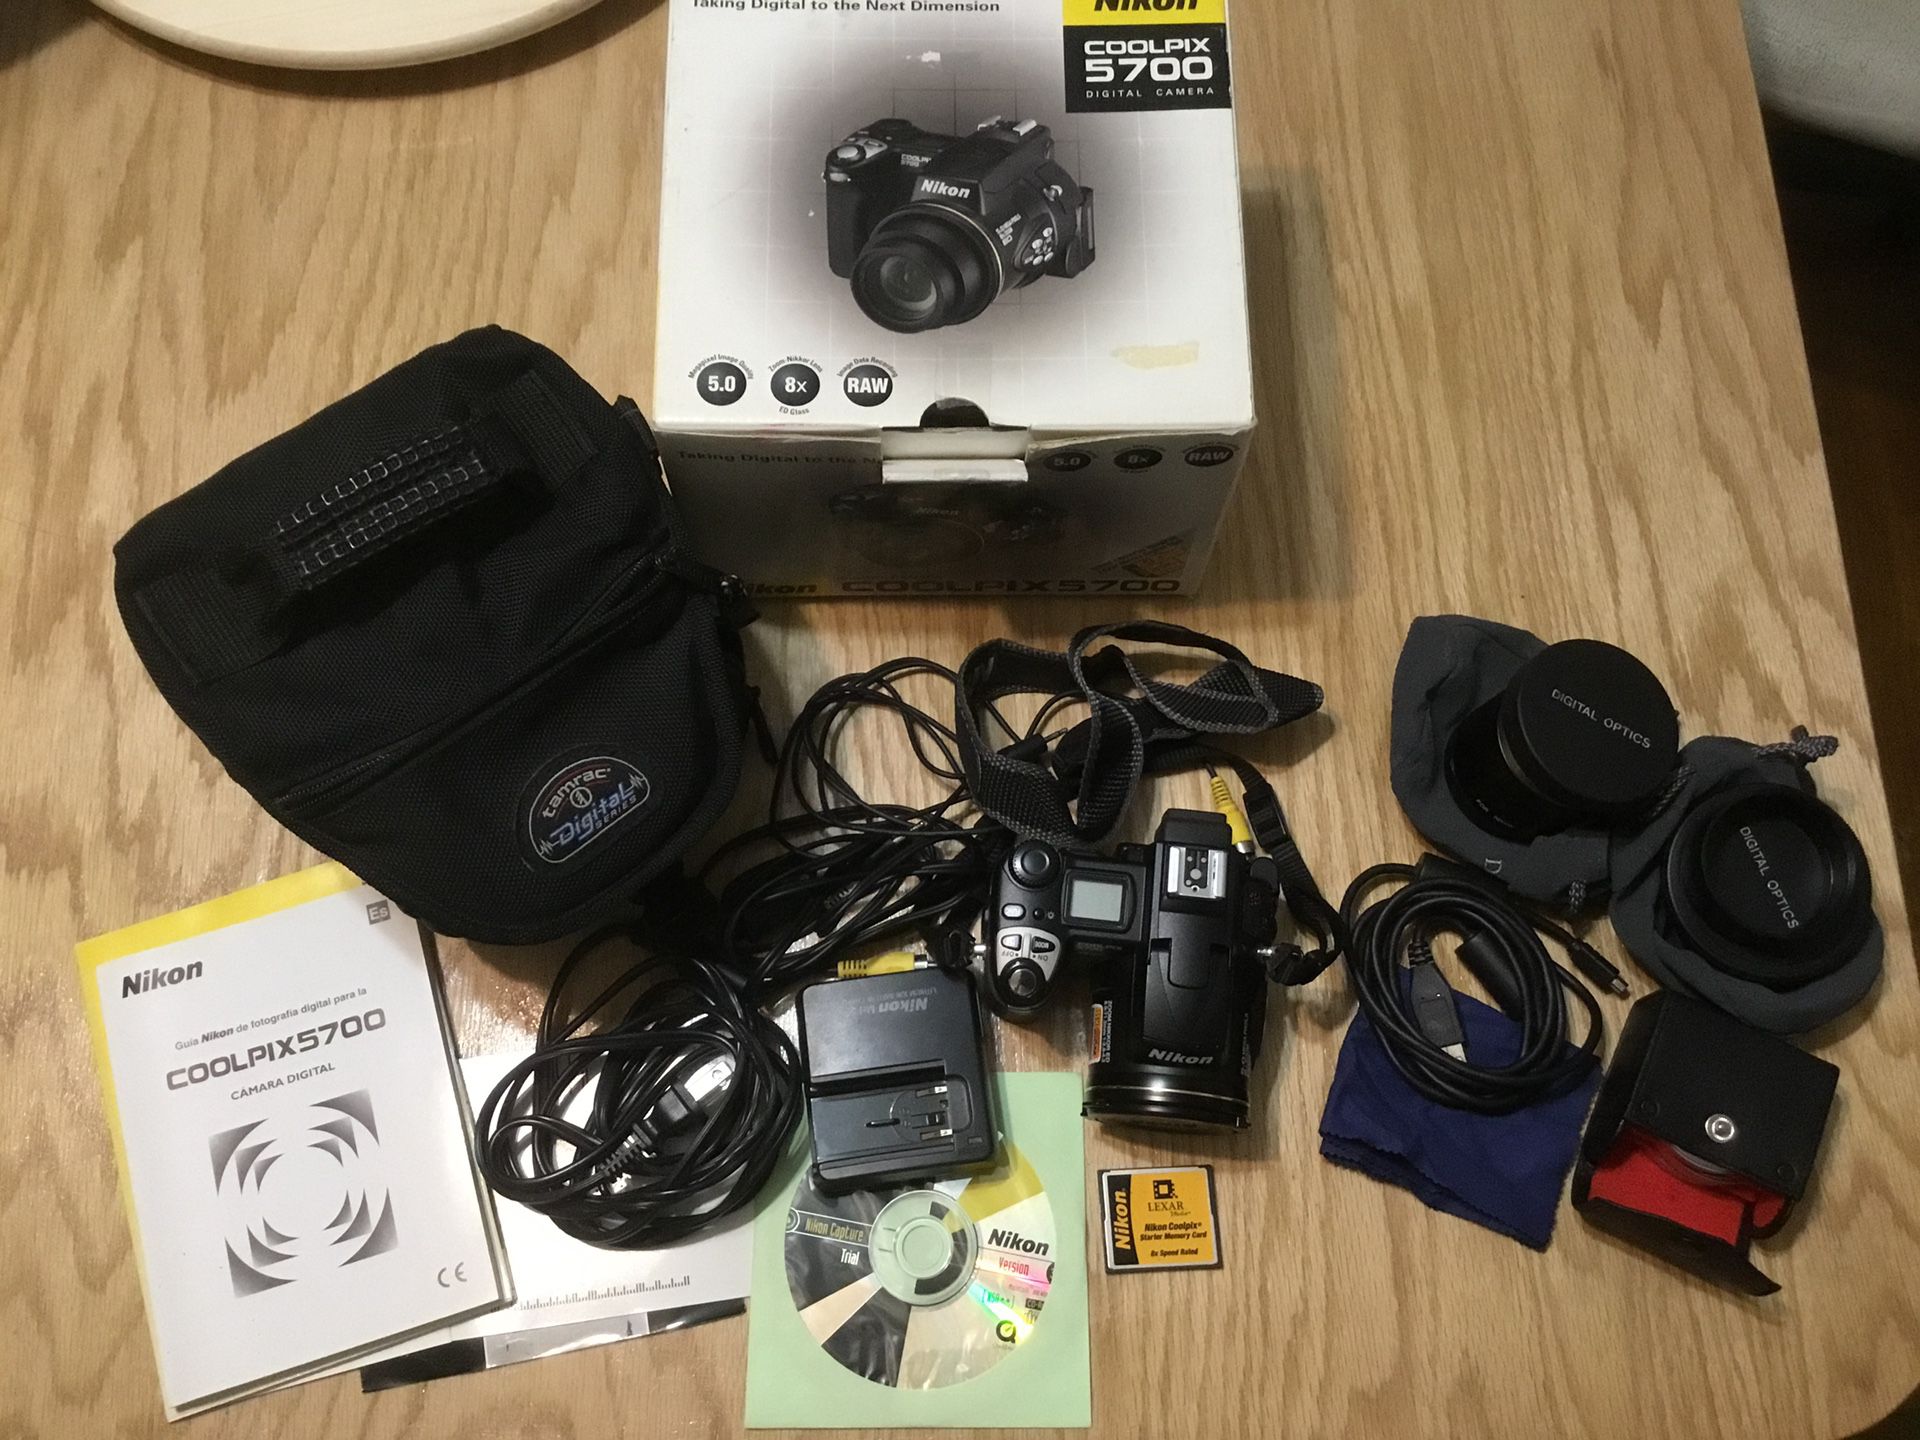 Nikon coolpix 5700 with extra lenses bag and original box